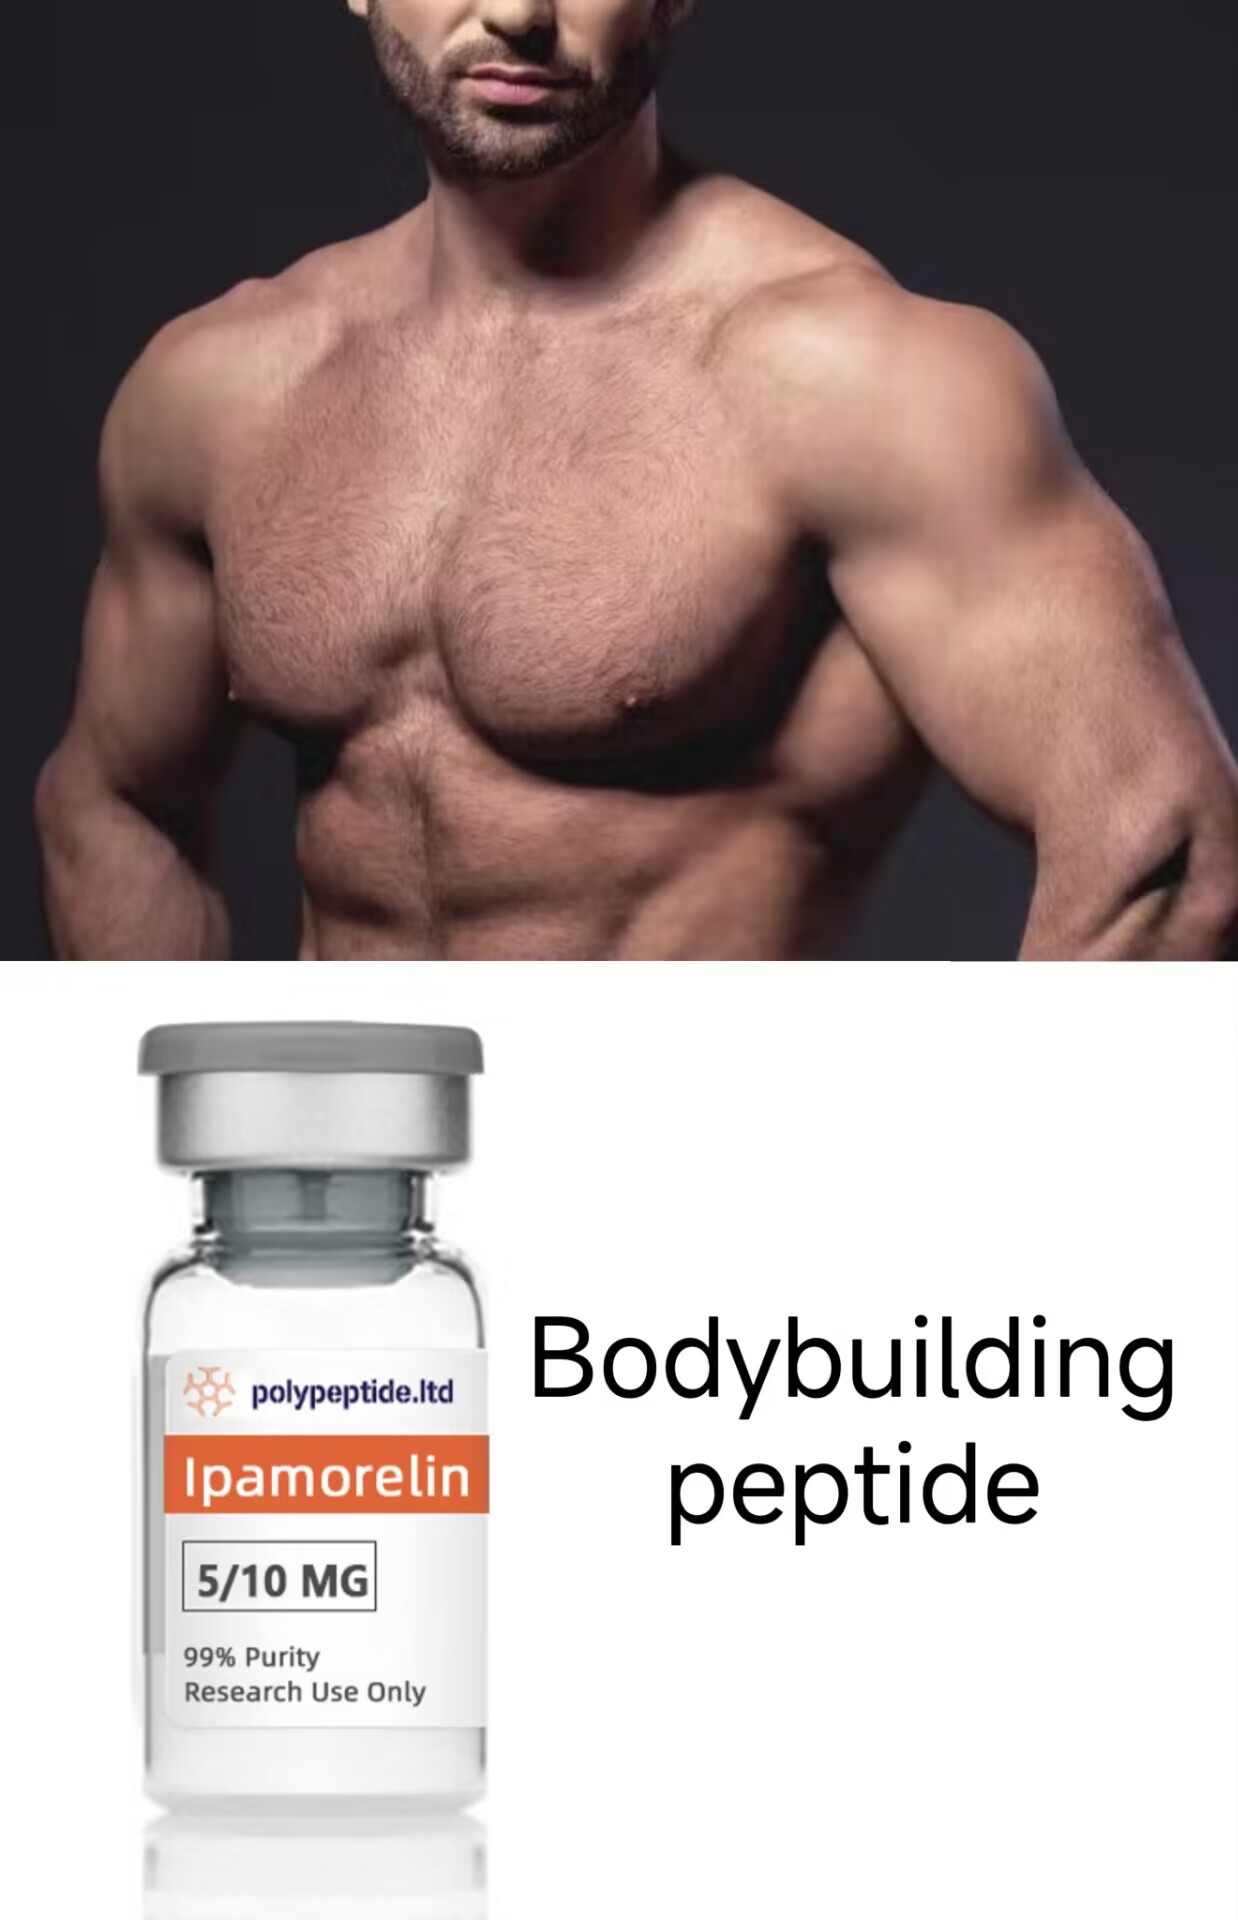 Ipamorelin Popular Bodybuilding Peptide Supplier-Polypeptide.ltd